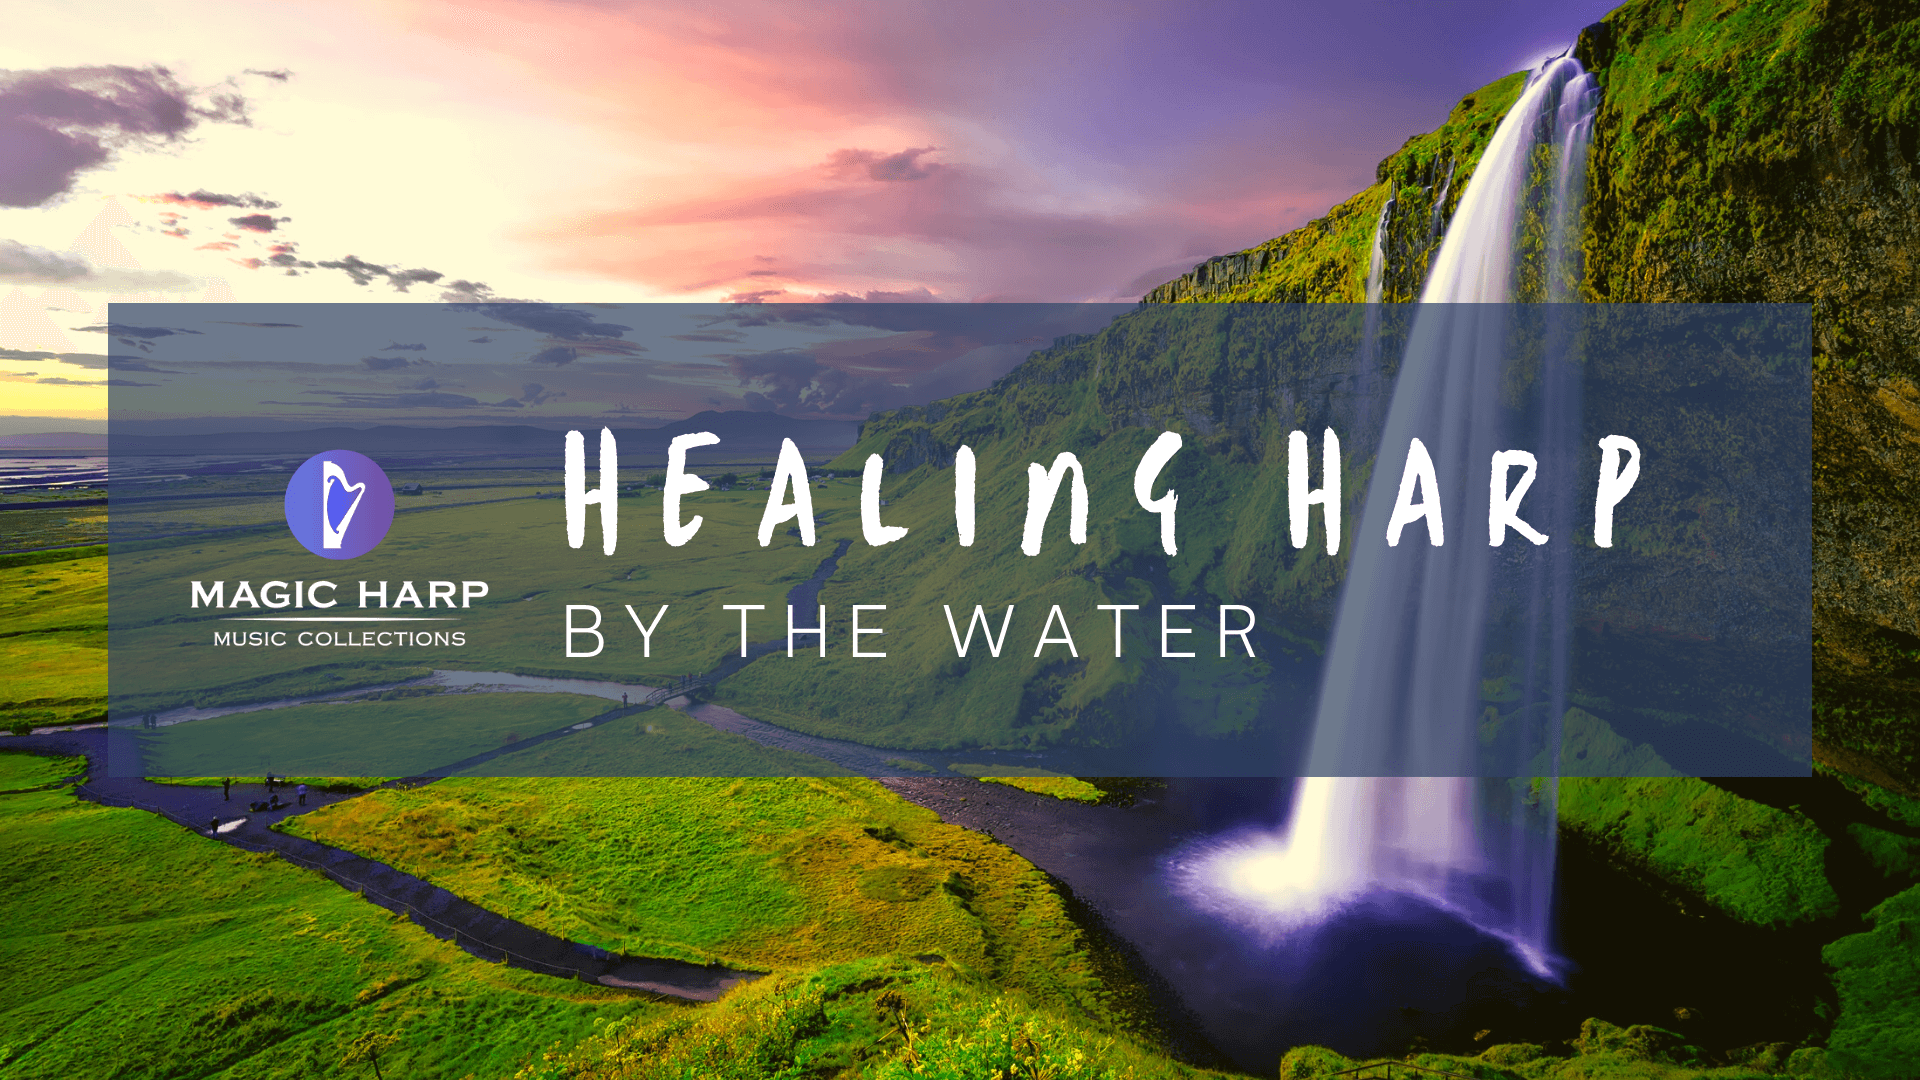 Healing harp by the water - magicharp.com